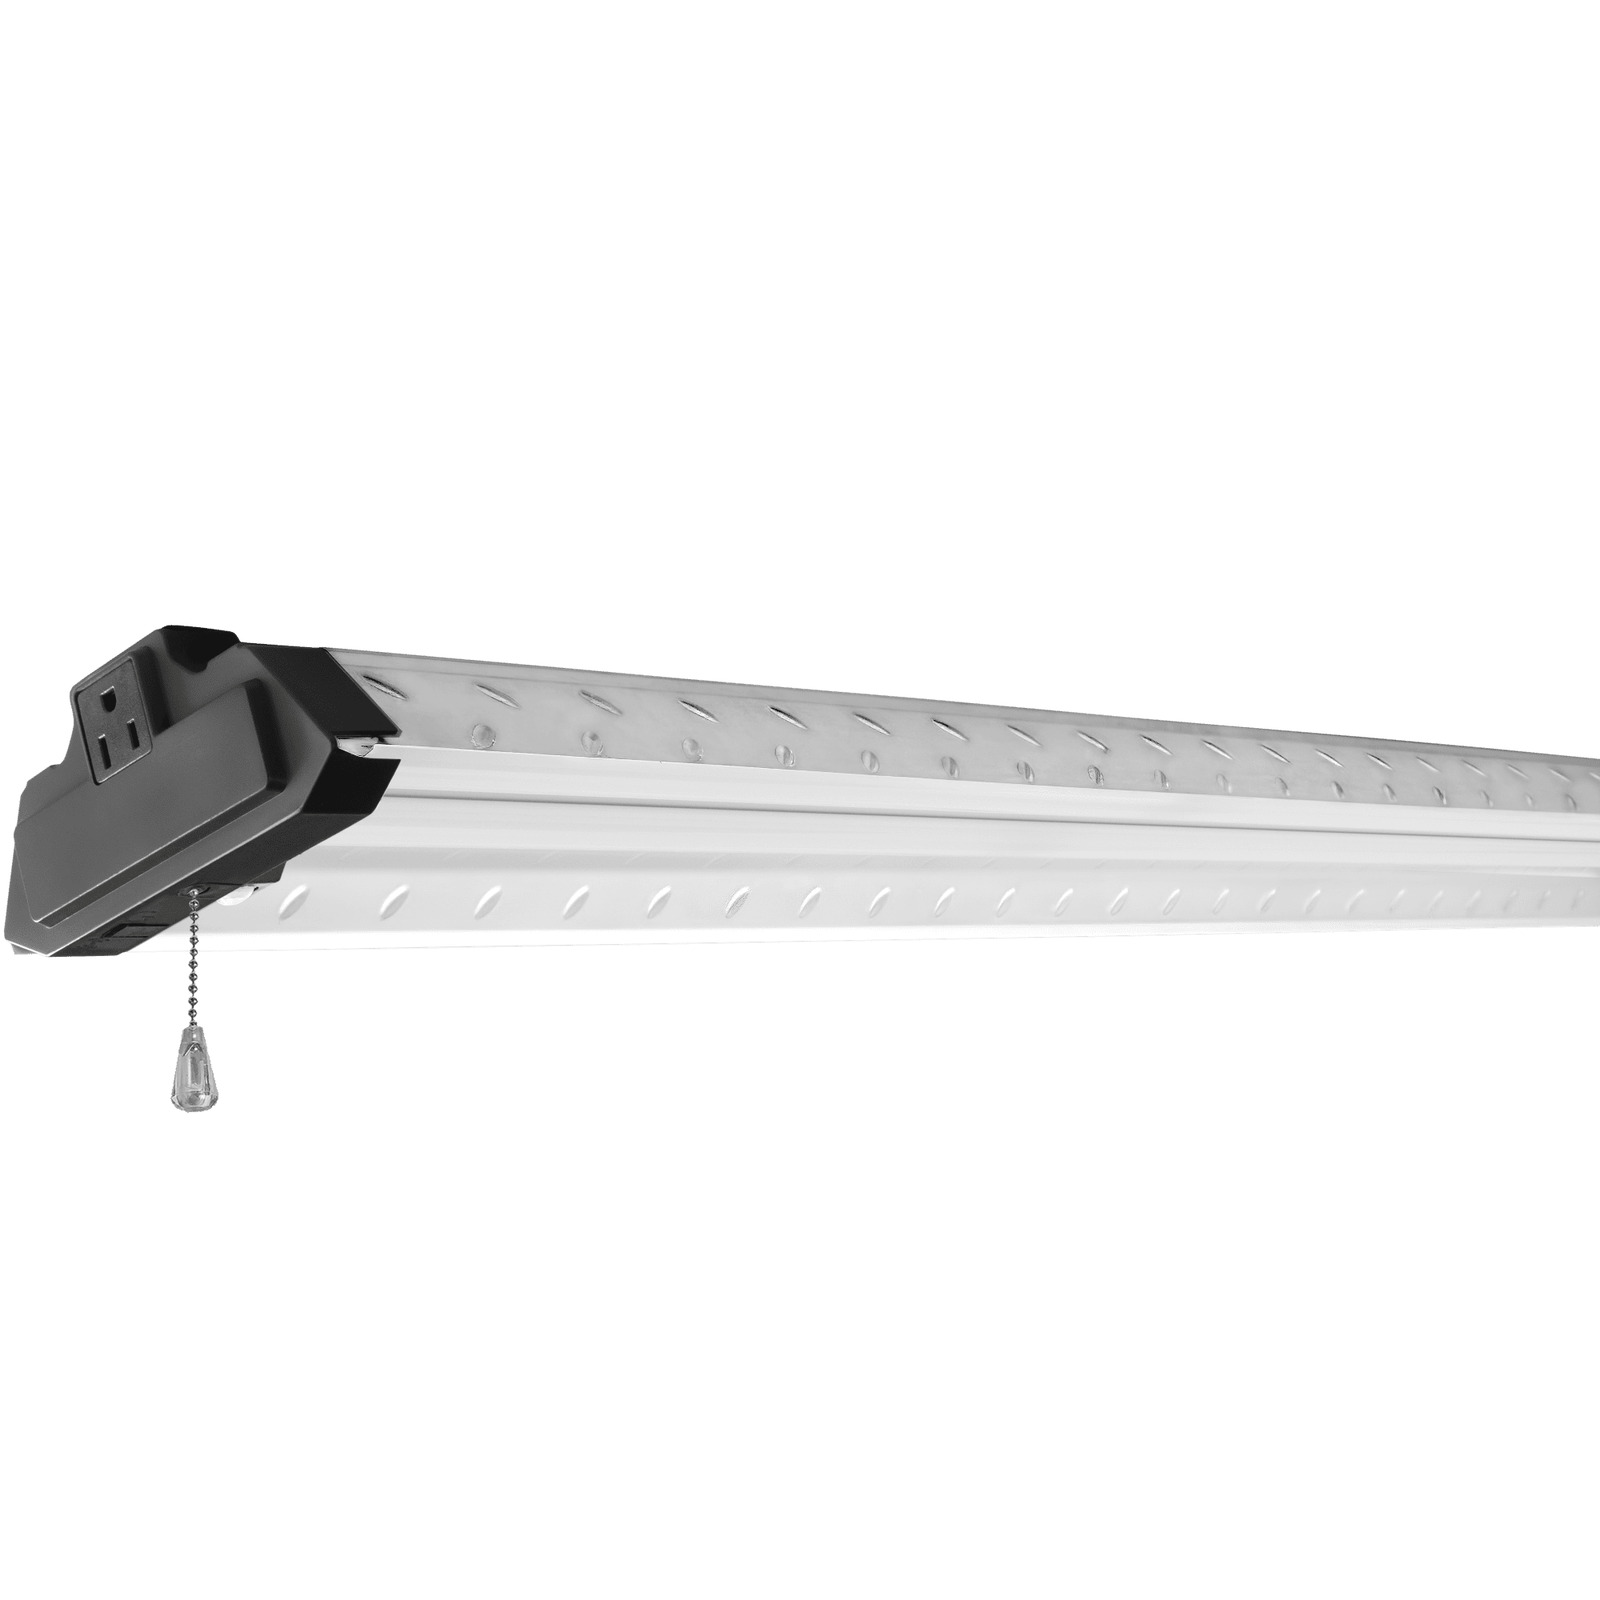 4ft LED Shop Light 10,000 Lumen with Motion, Steel Tread Plate